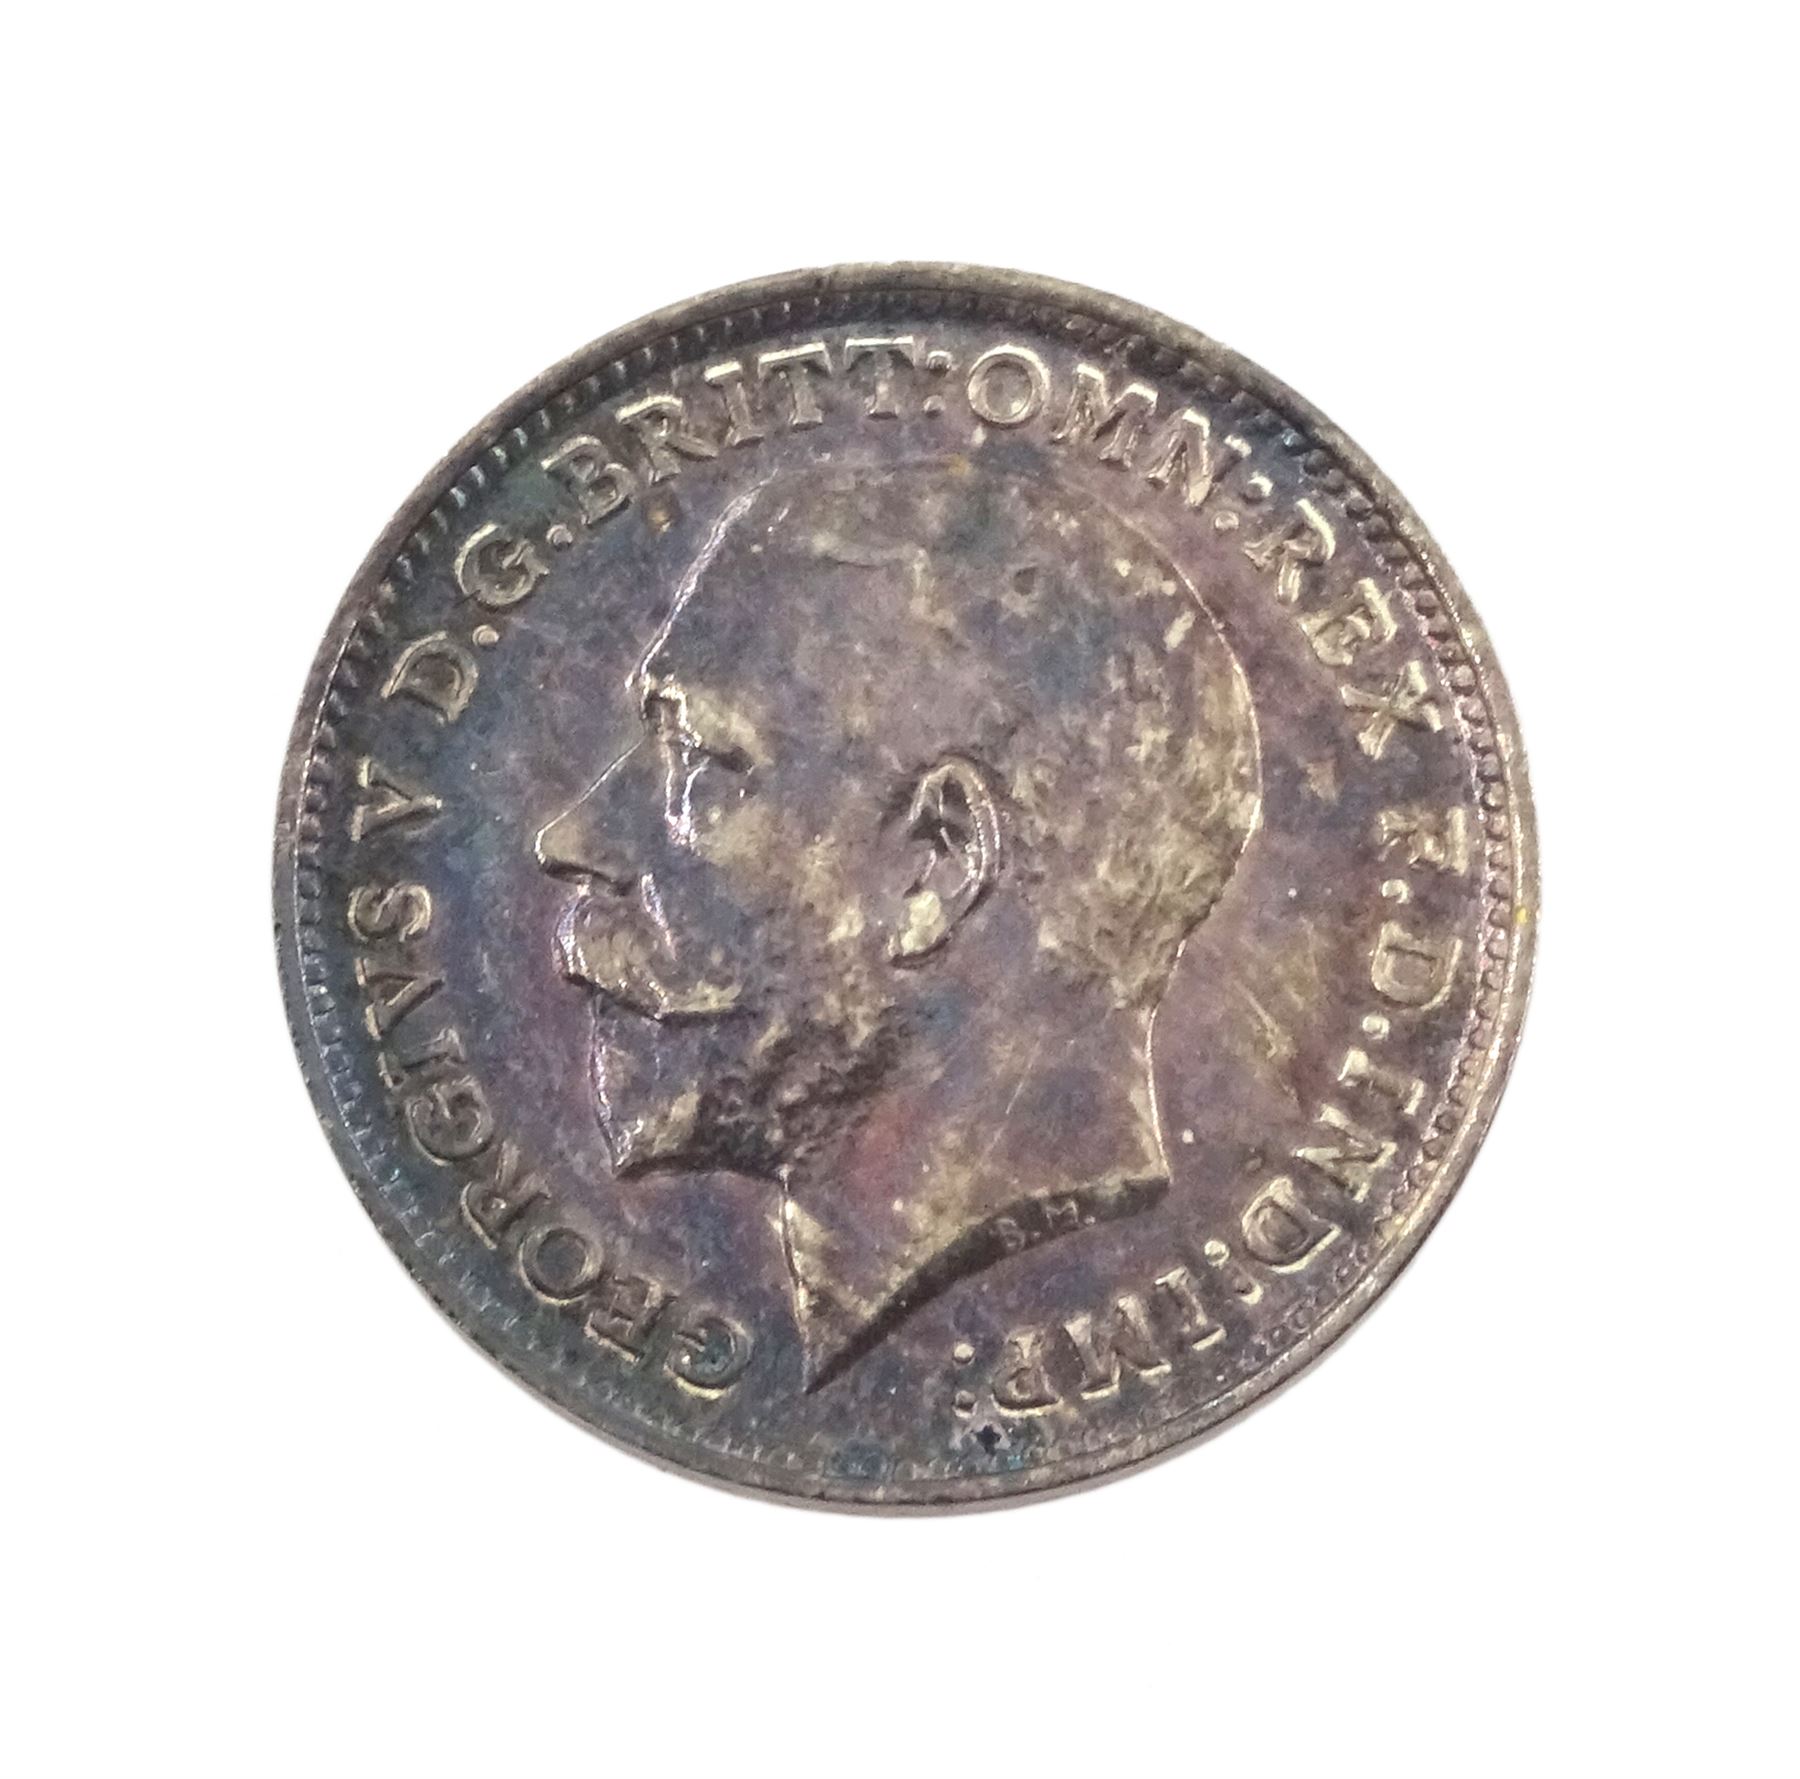 King George V 1911 proof long coin set - Image 22 of 28